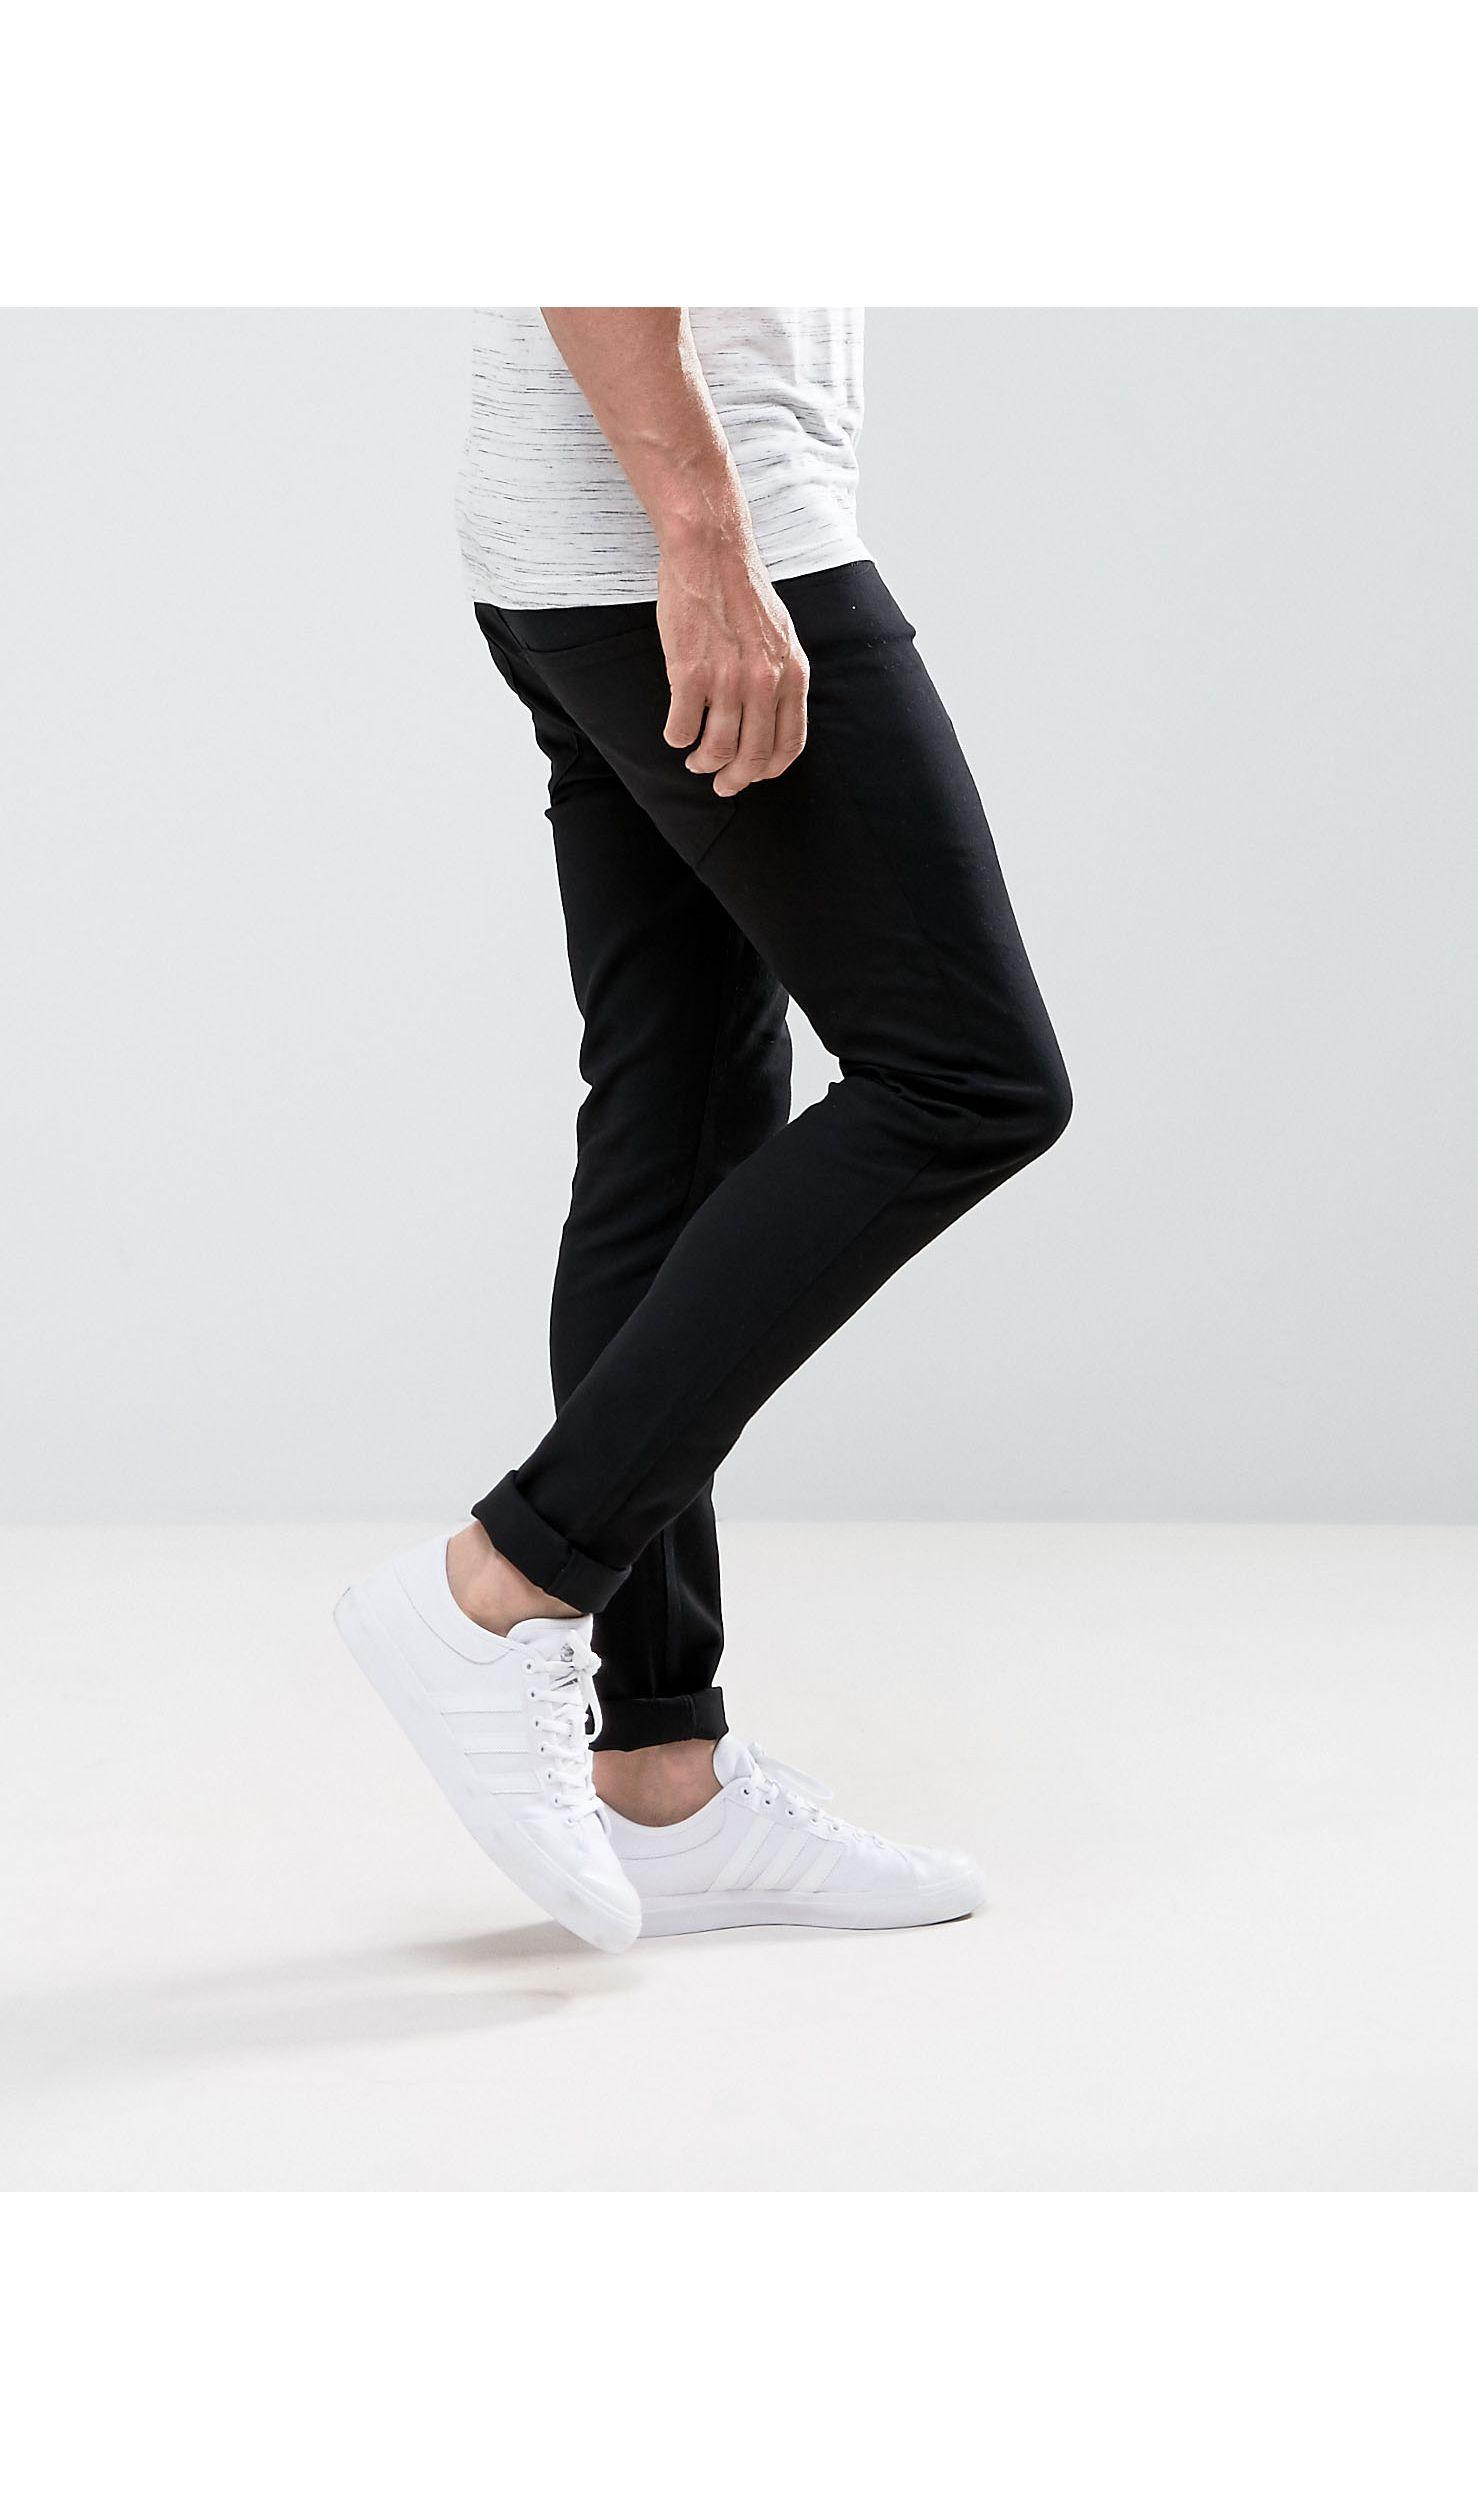 French Connection Denim Super Skinny Jeans in Black for Men - Lyst